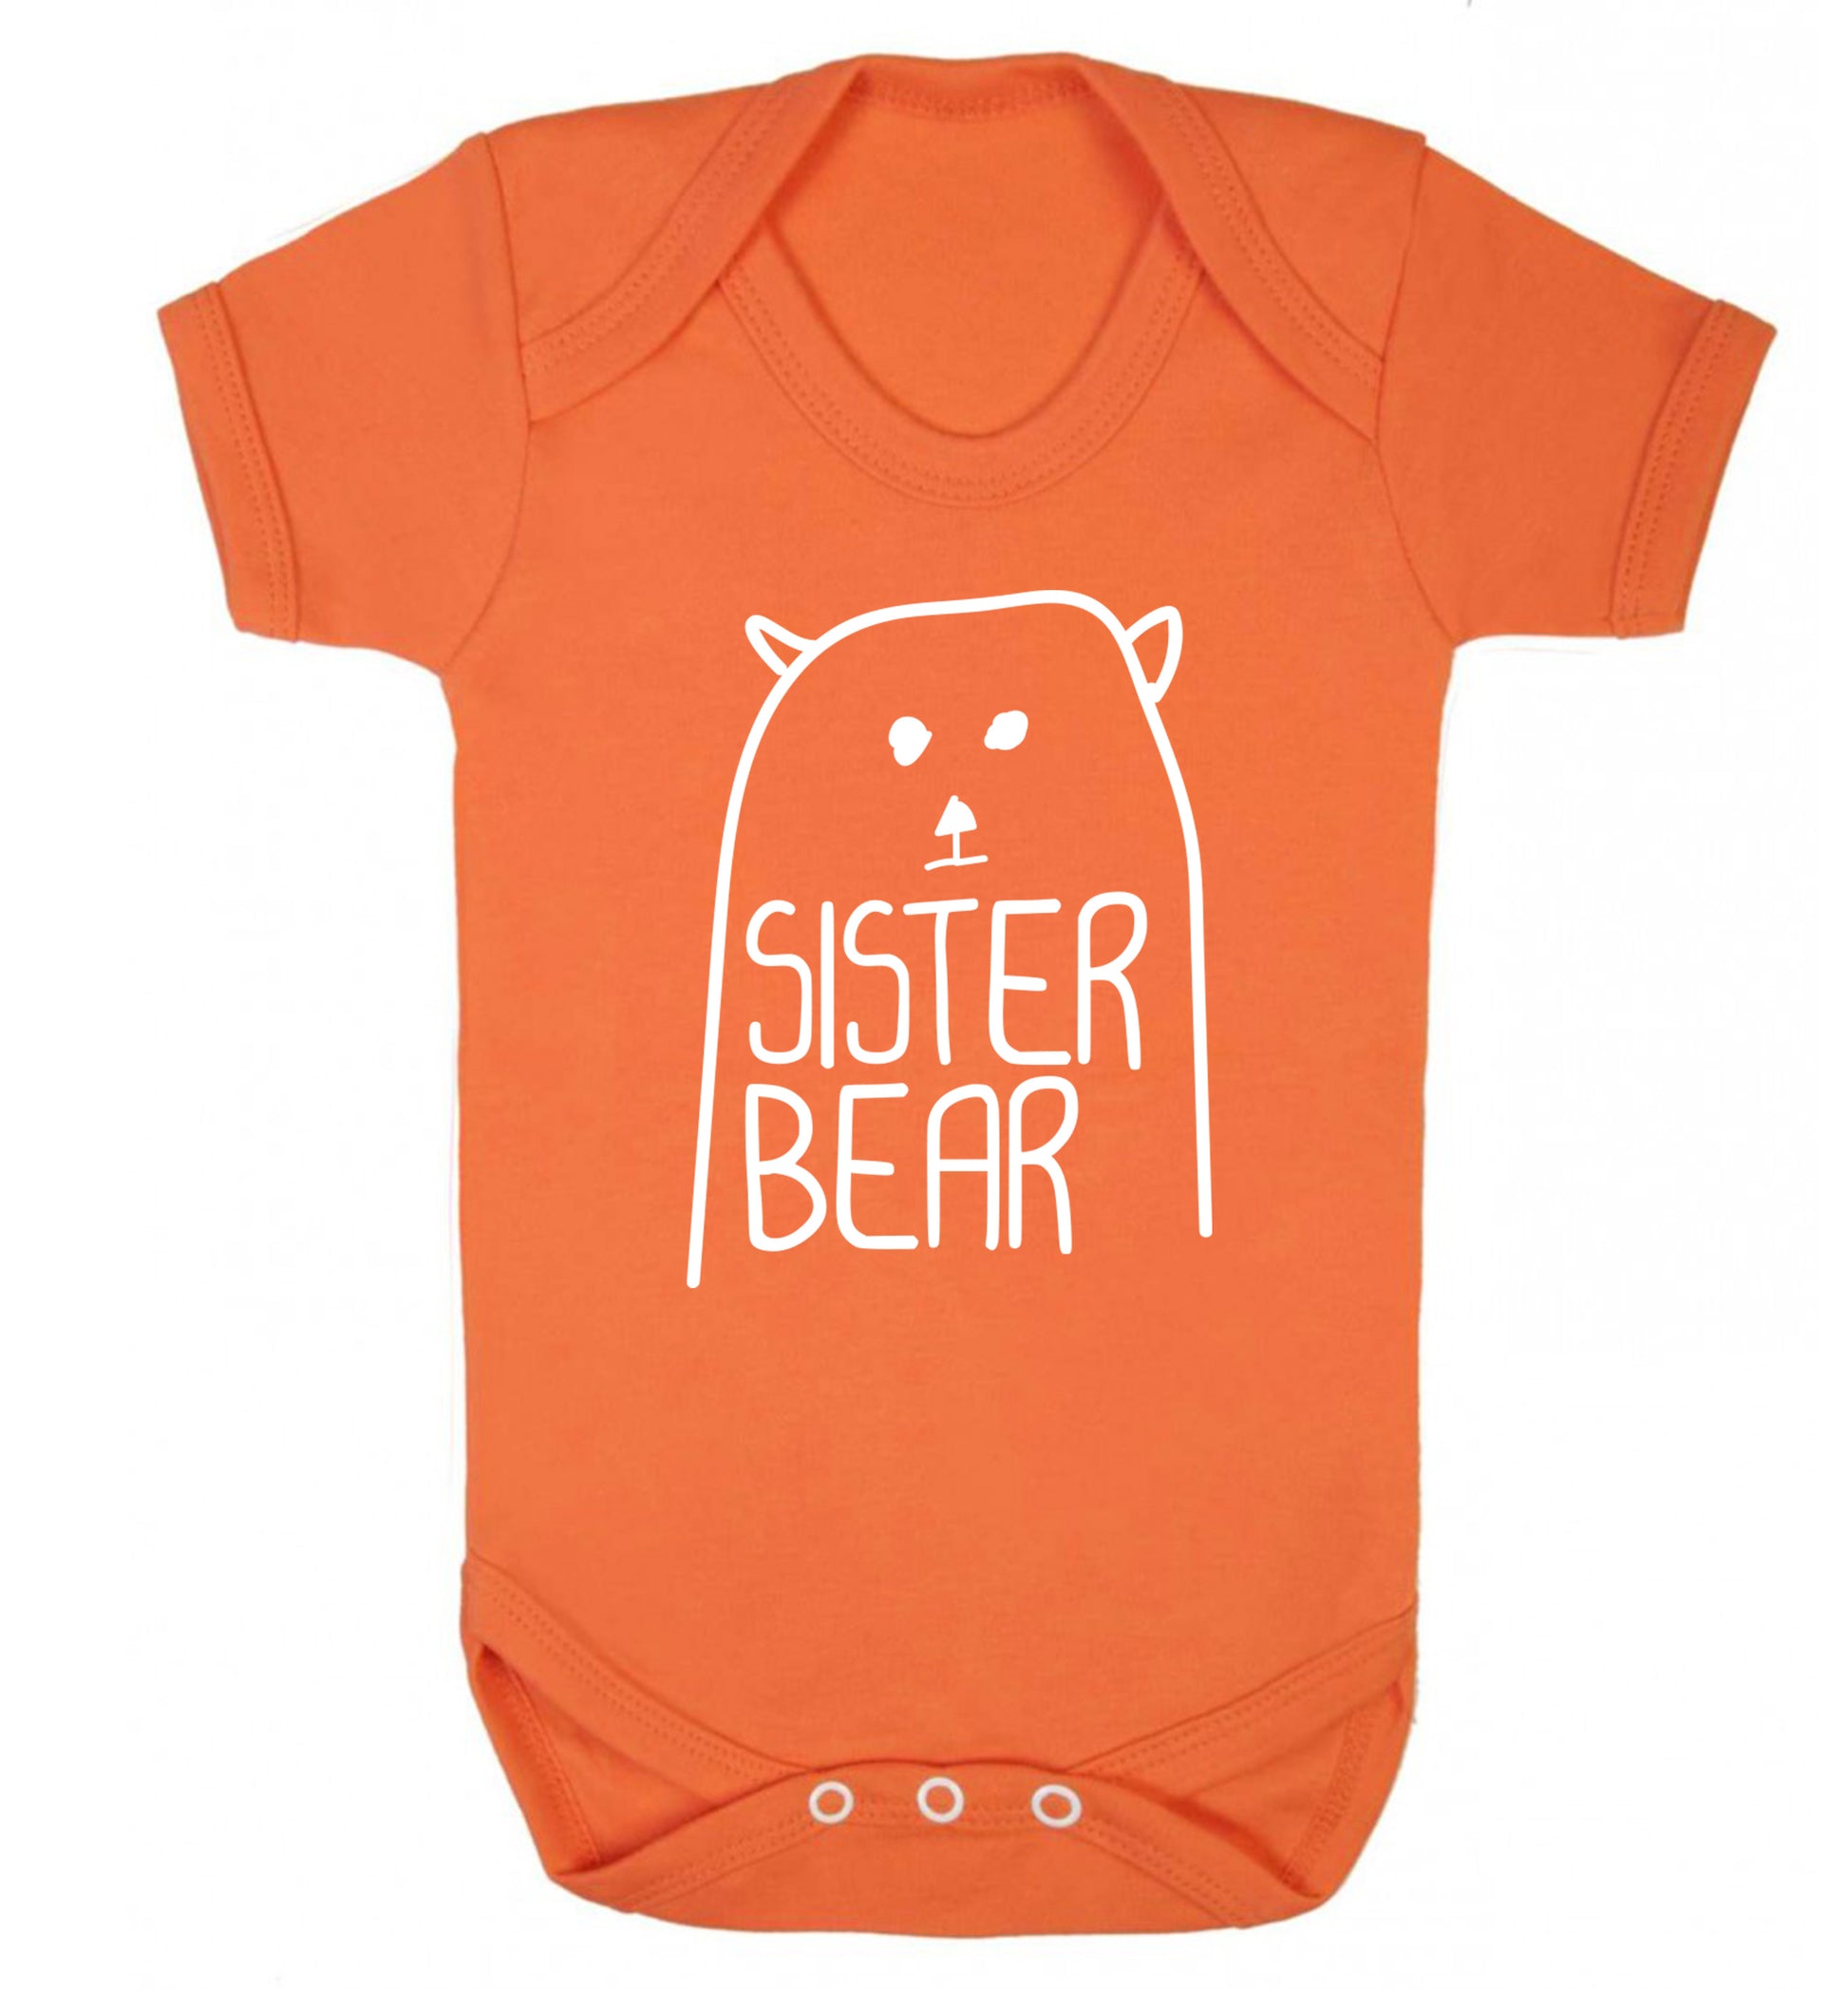 Sister bear Baby Vest orange 18-24 months